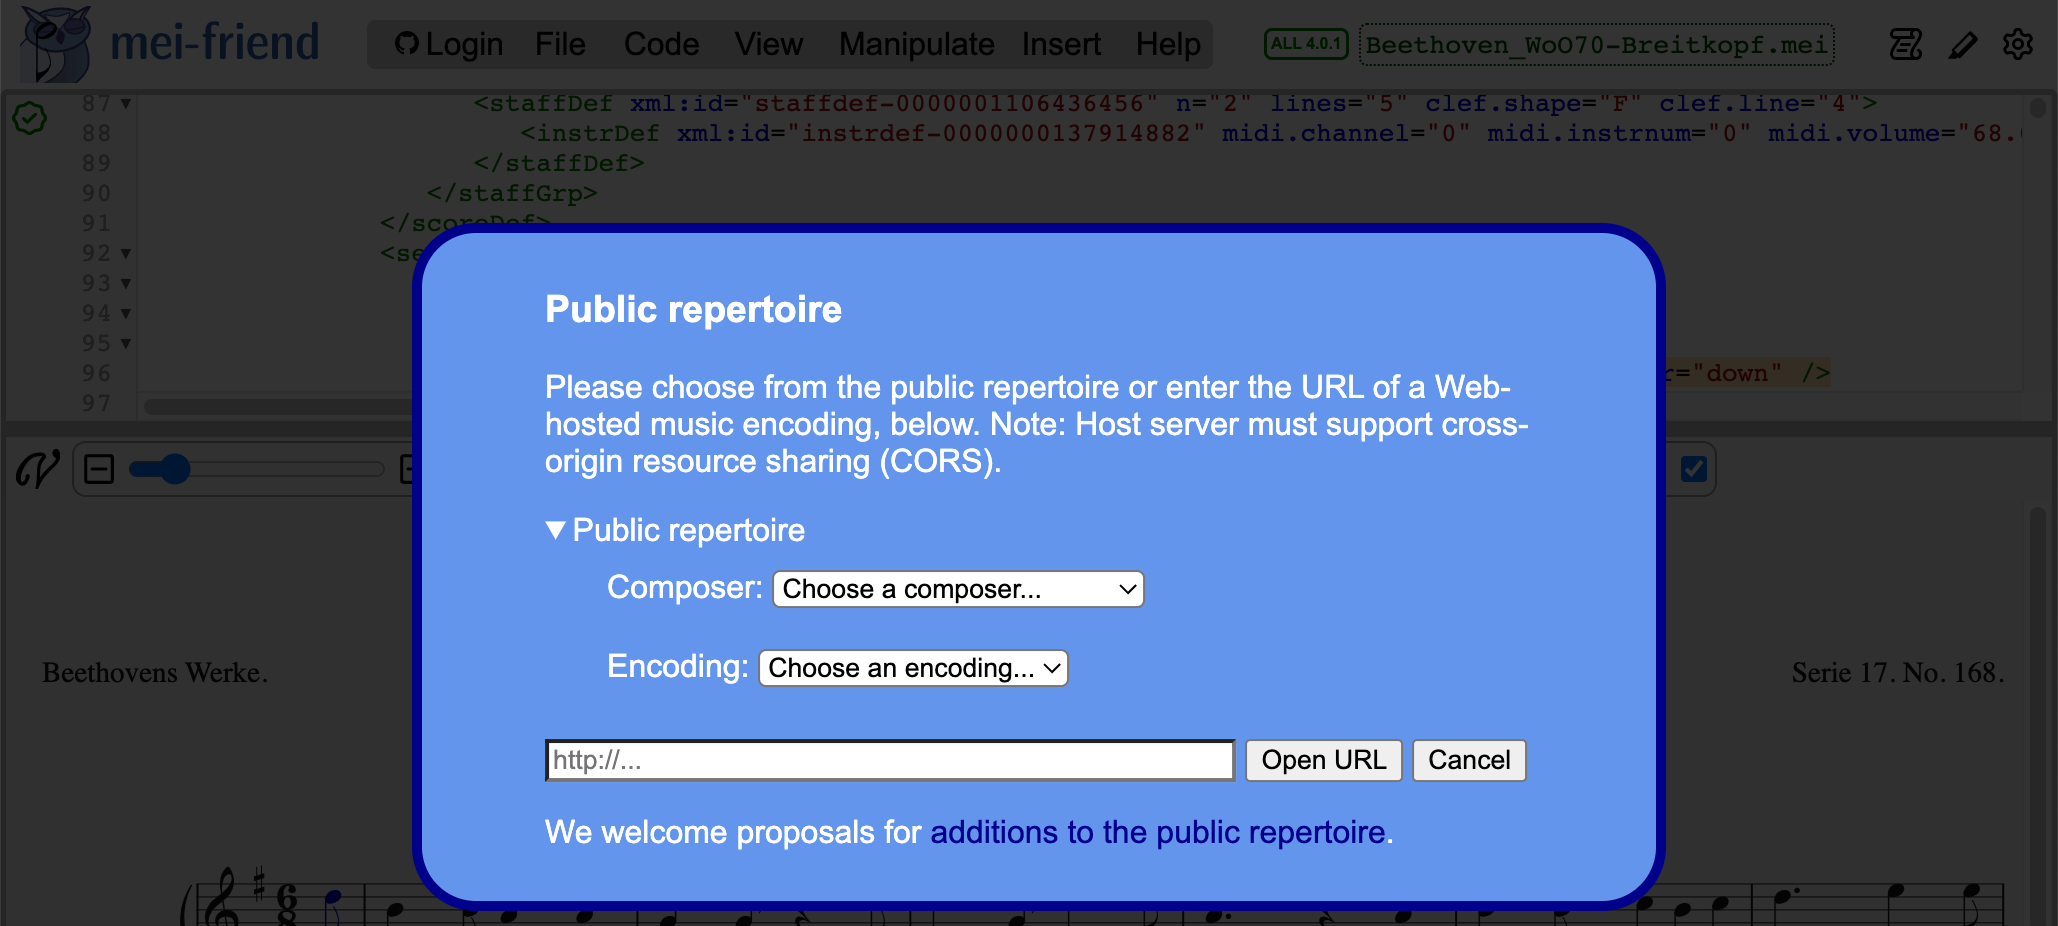 Screenshot of mei-friend public repertoire and open URL dialog